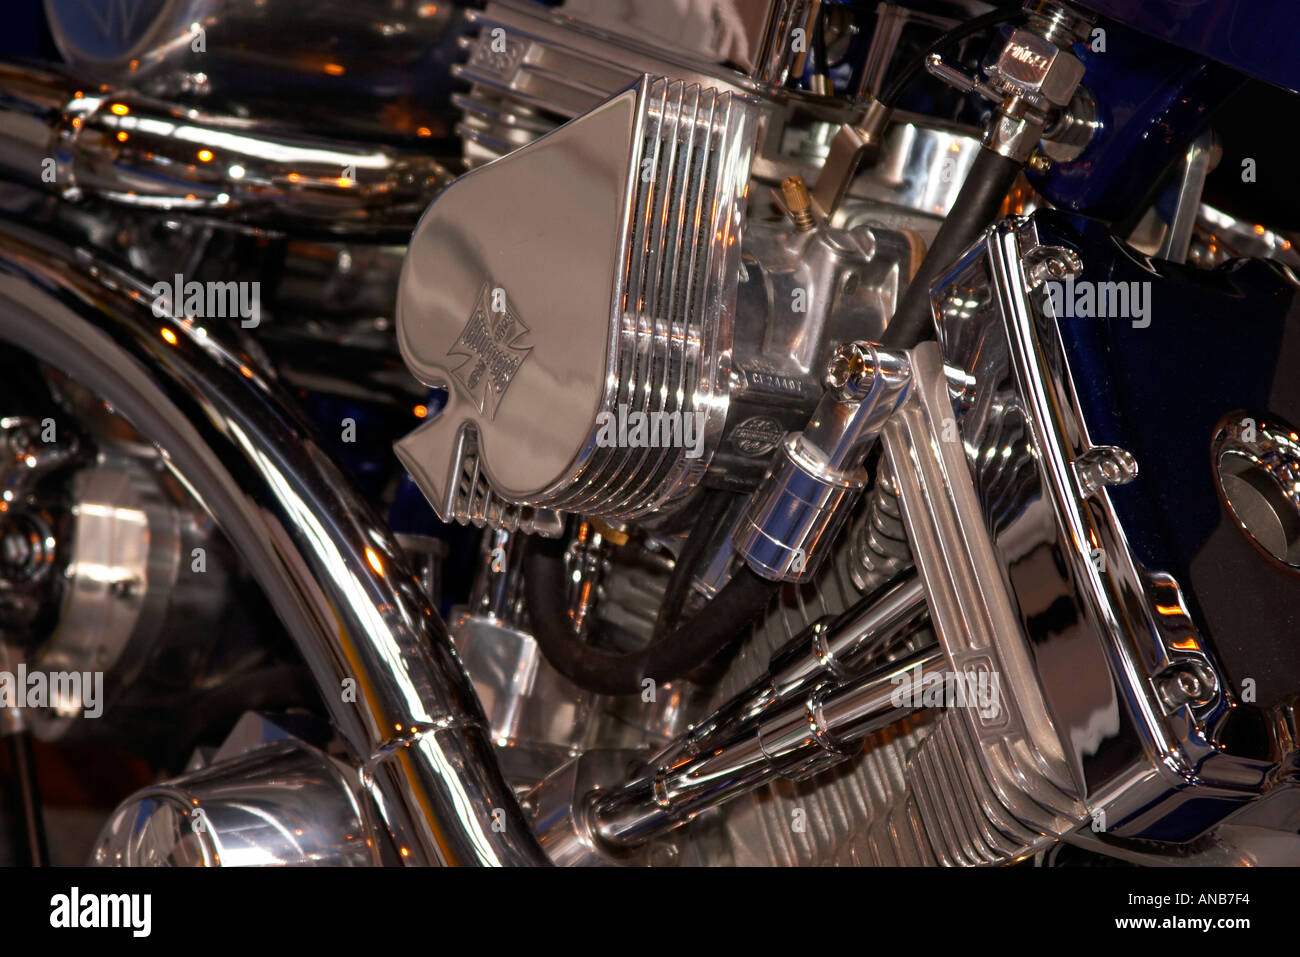 Vee twin motore in moto Foto Stock